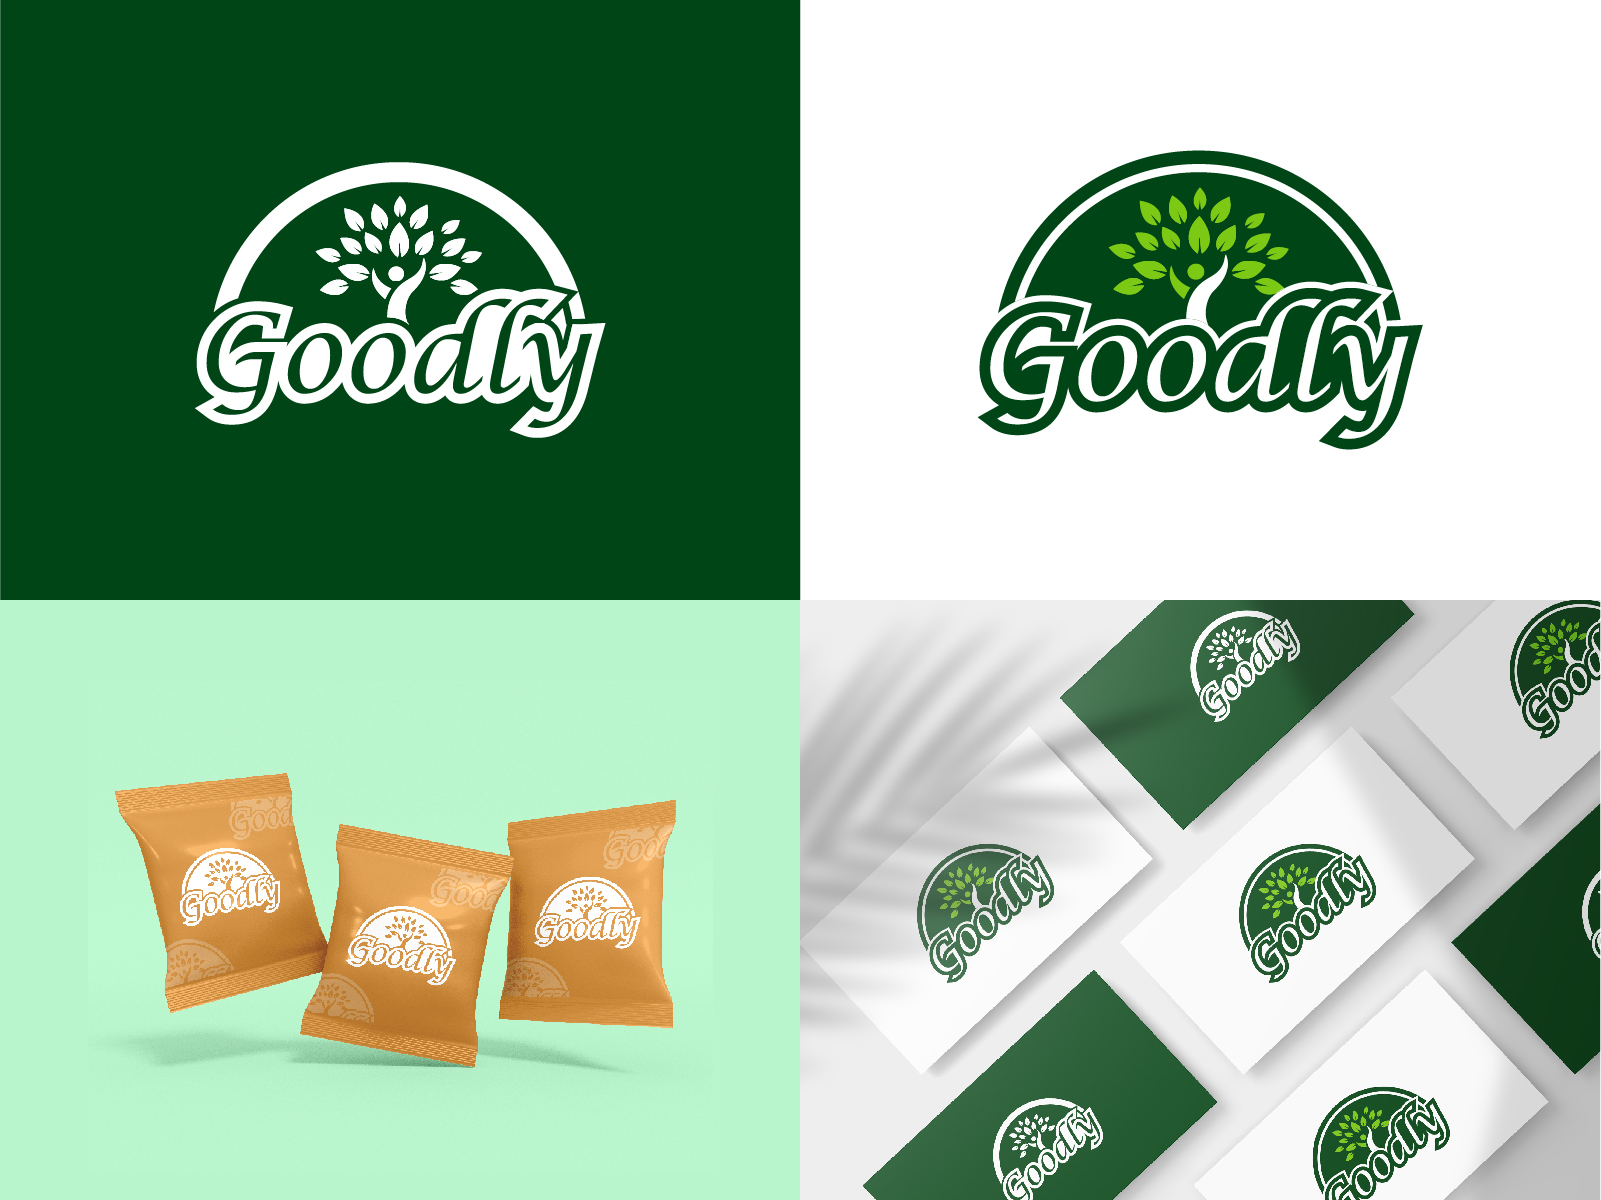 international food company logos